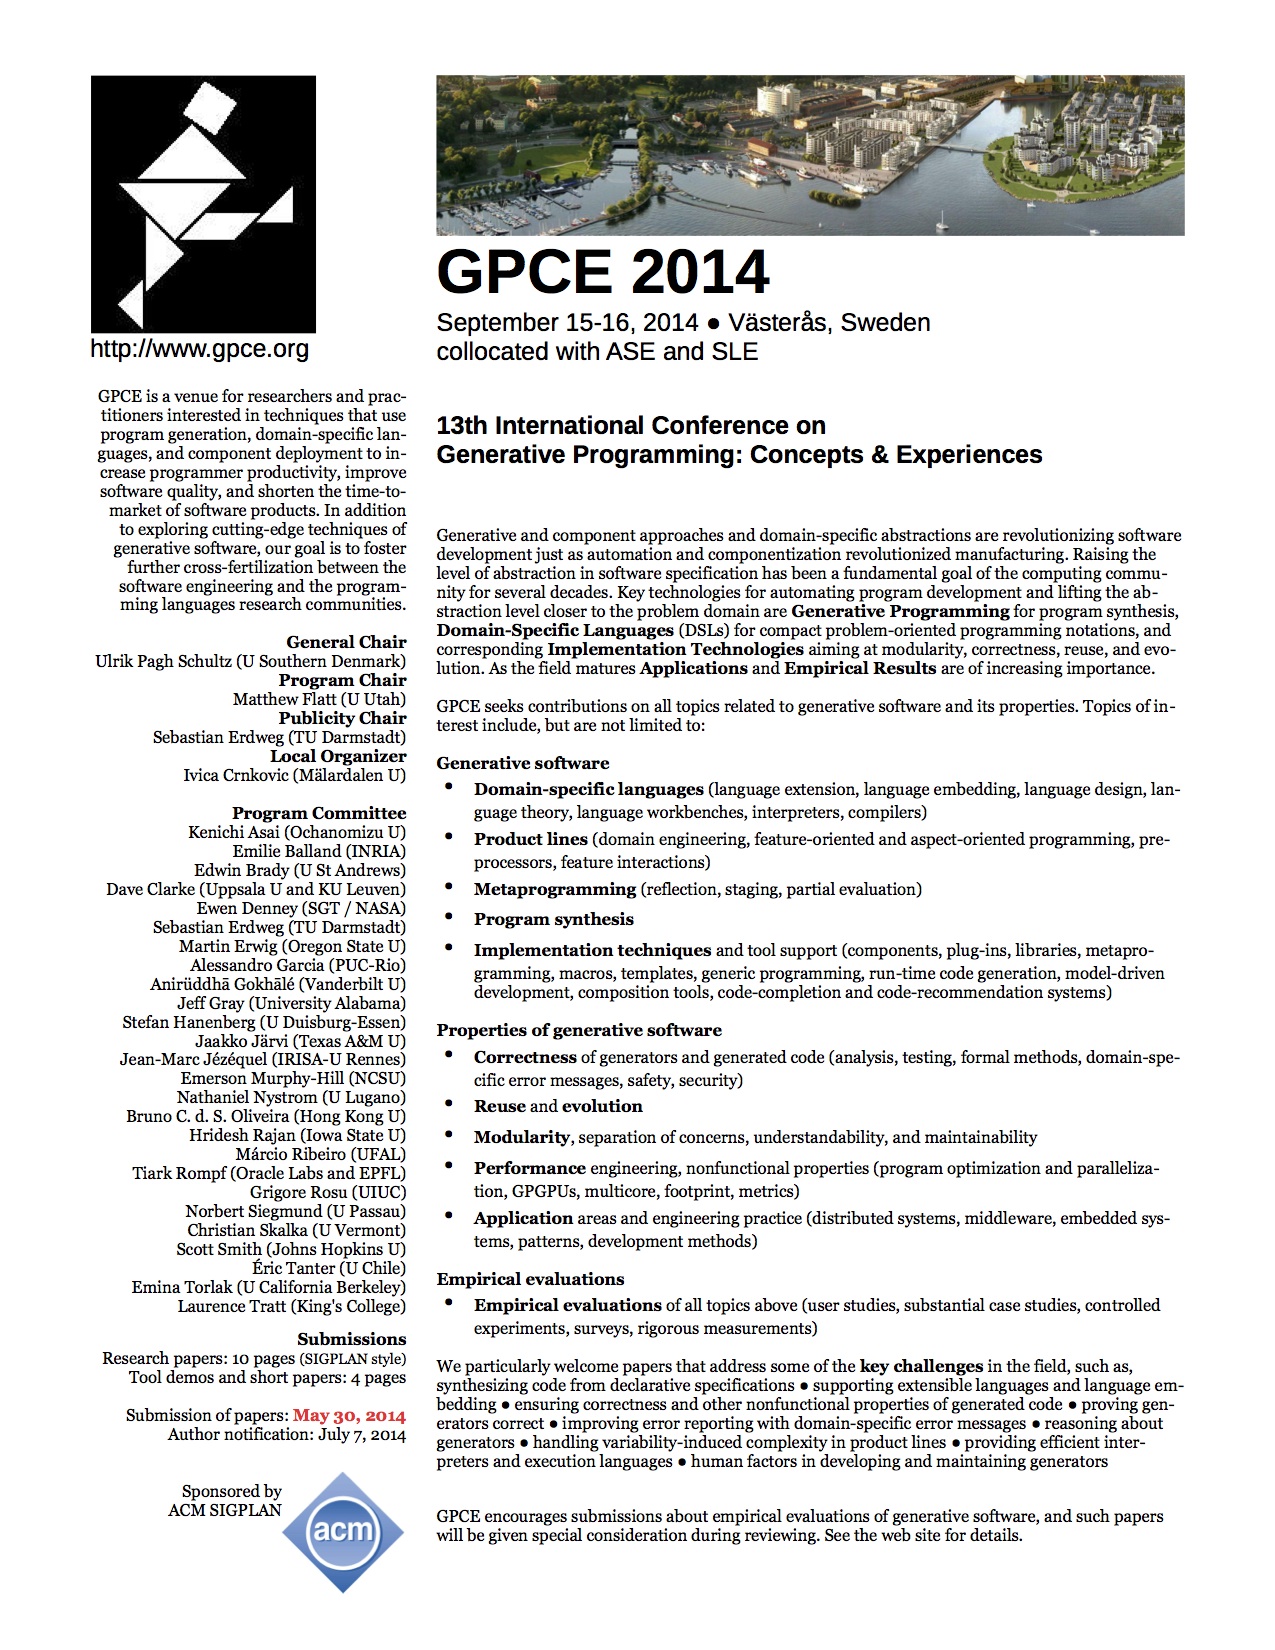 GPCE 2014 flyer